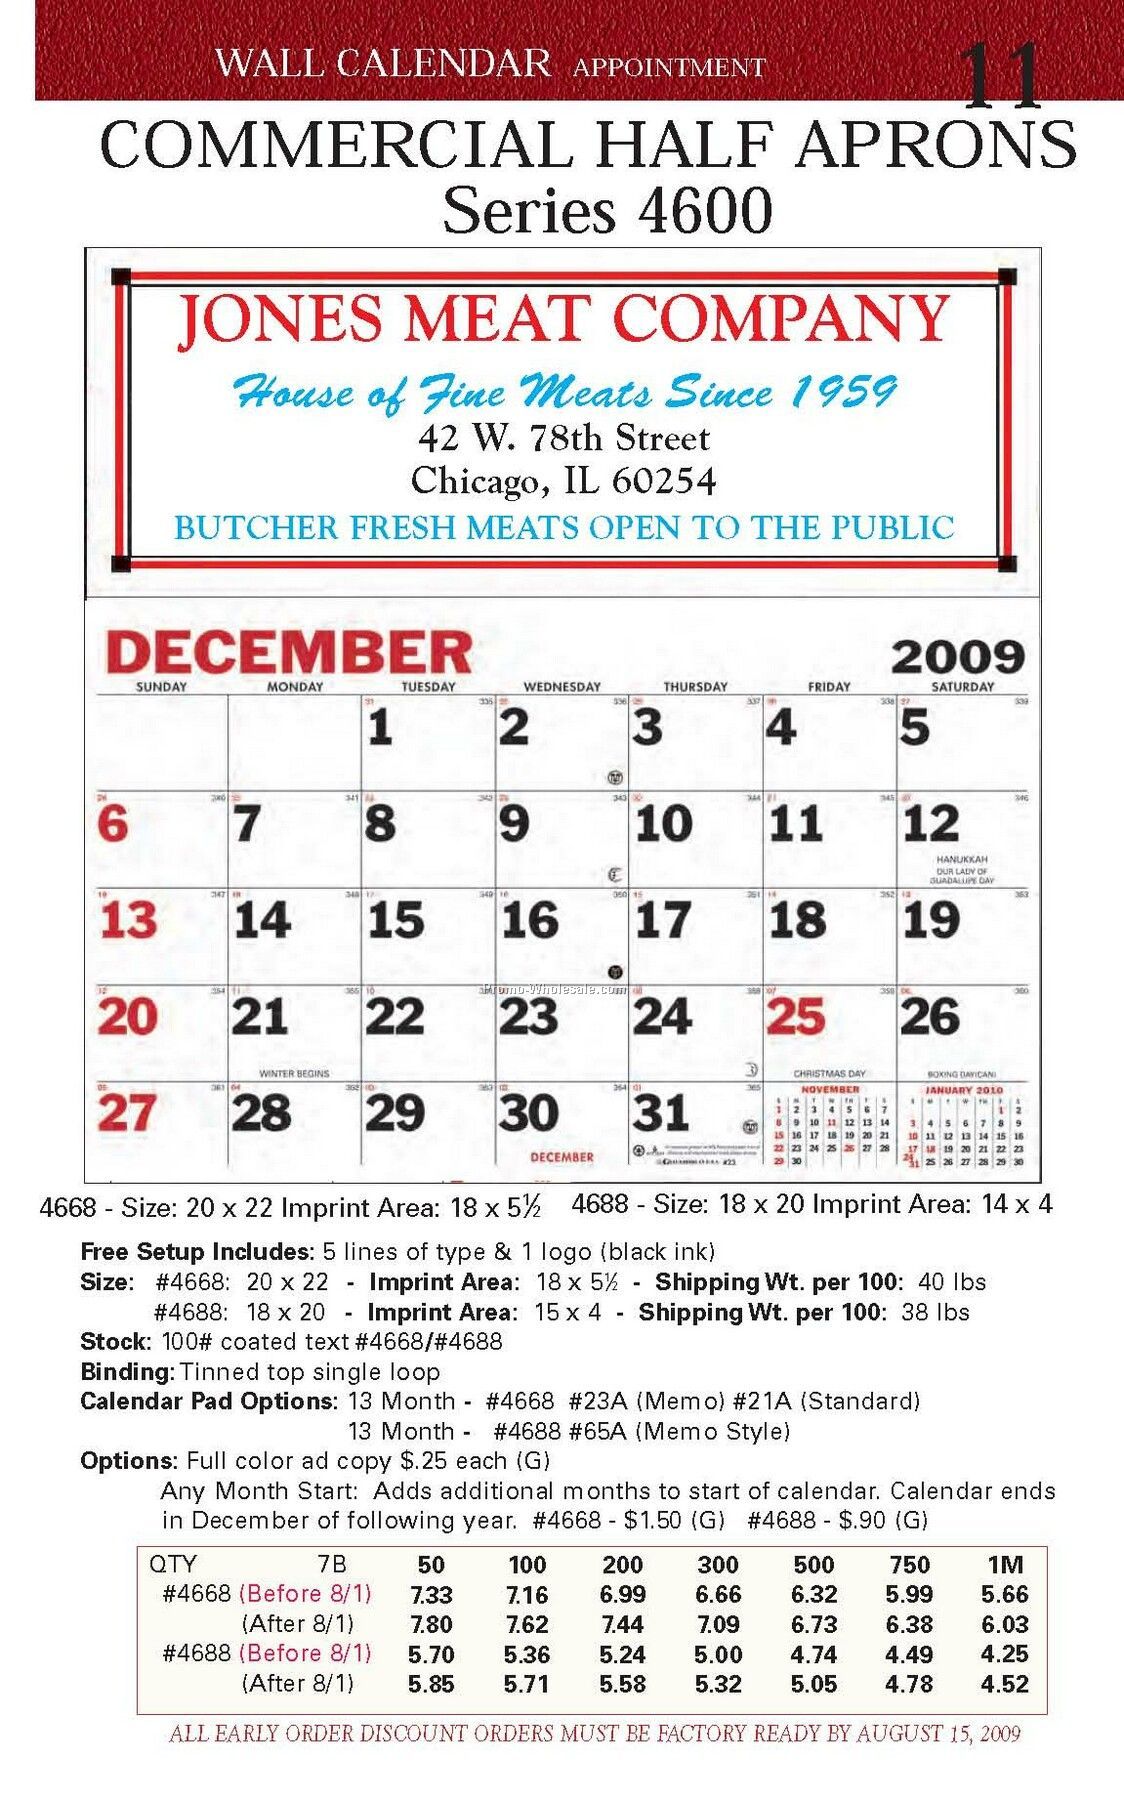 20"x22" Commercial Half Apron Appointment Calendar